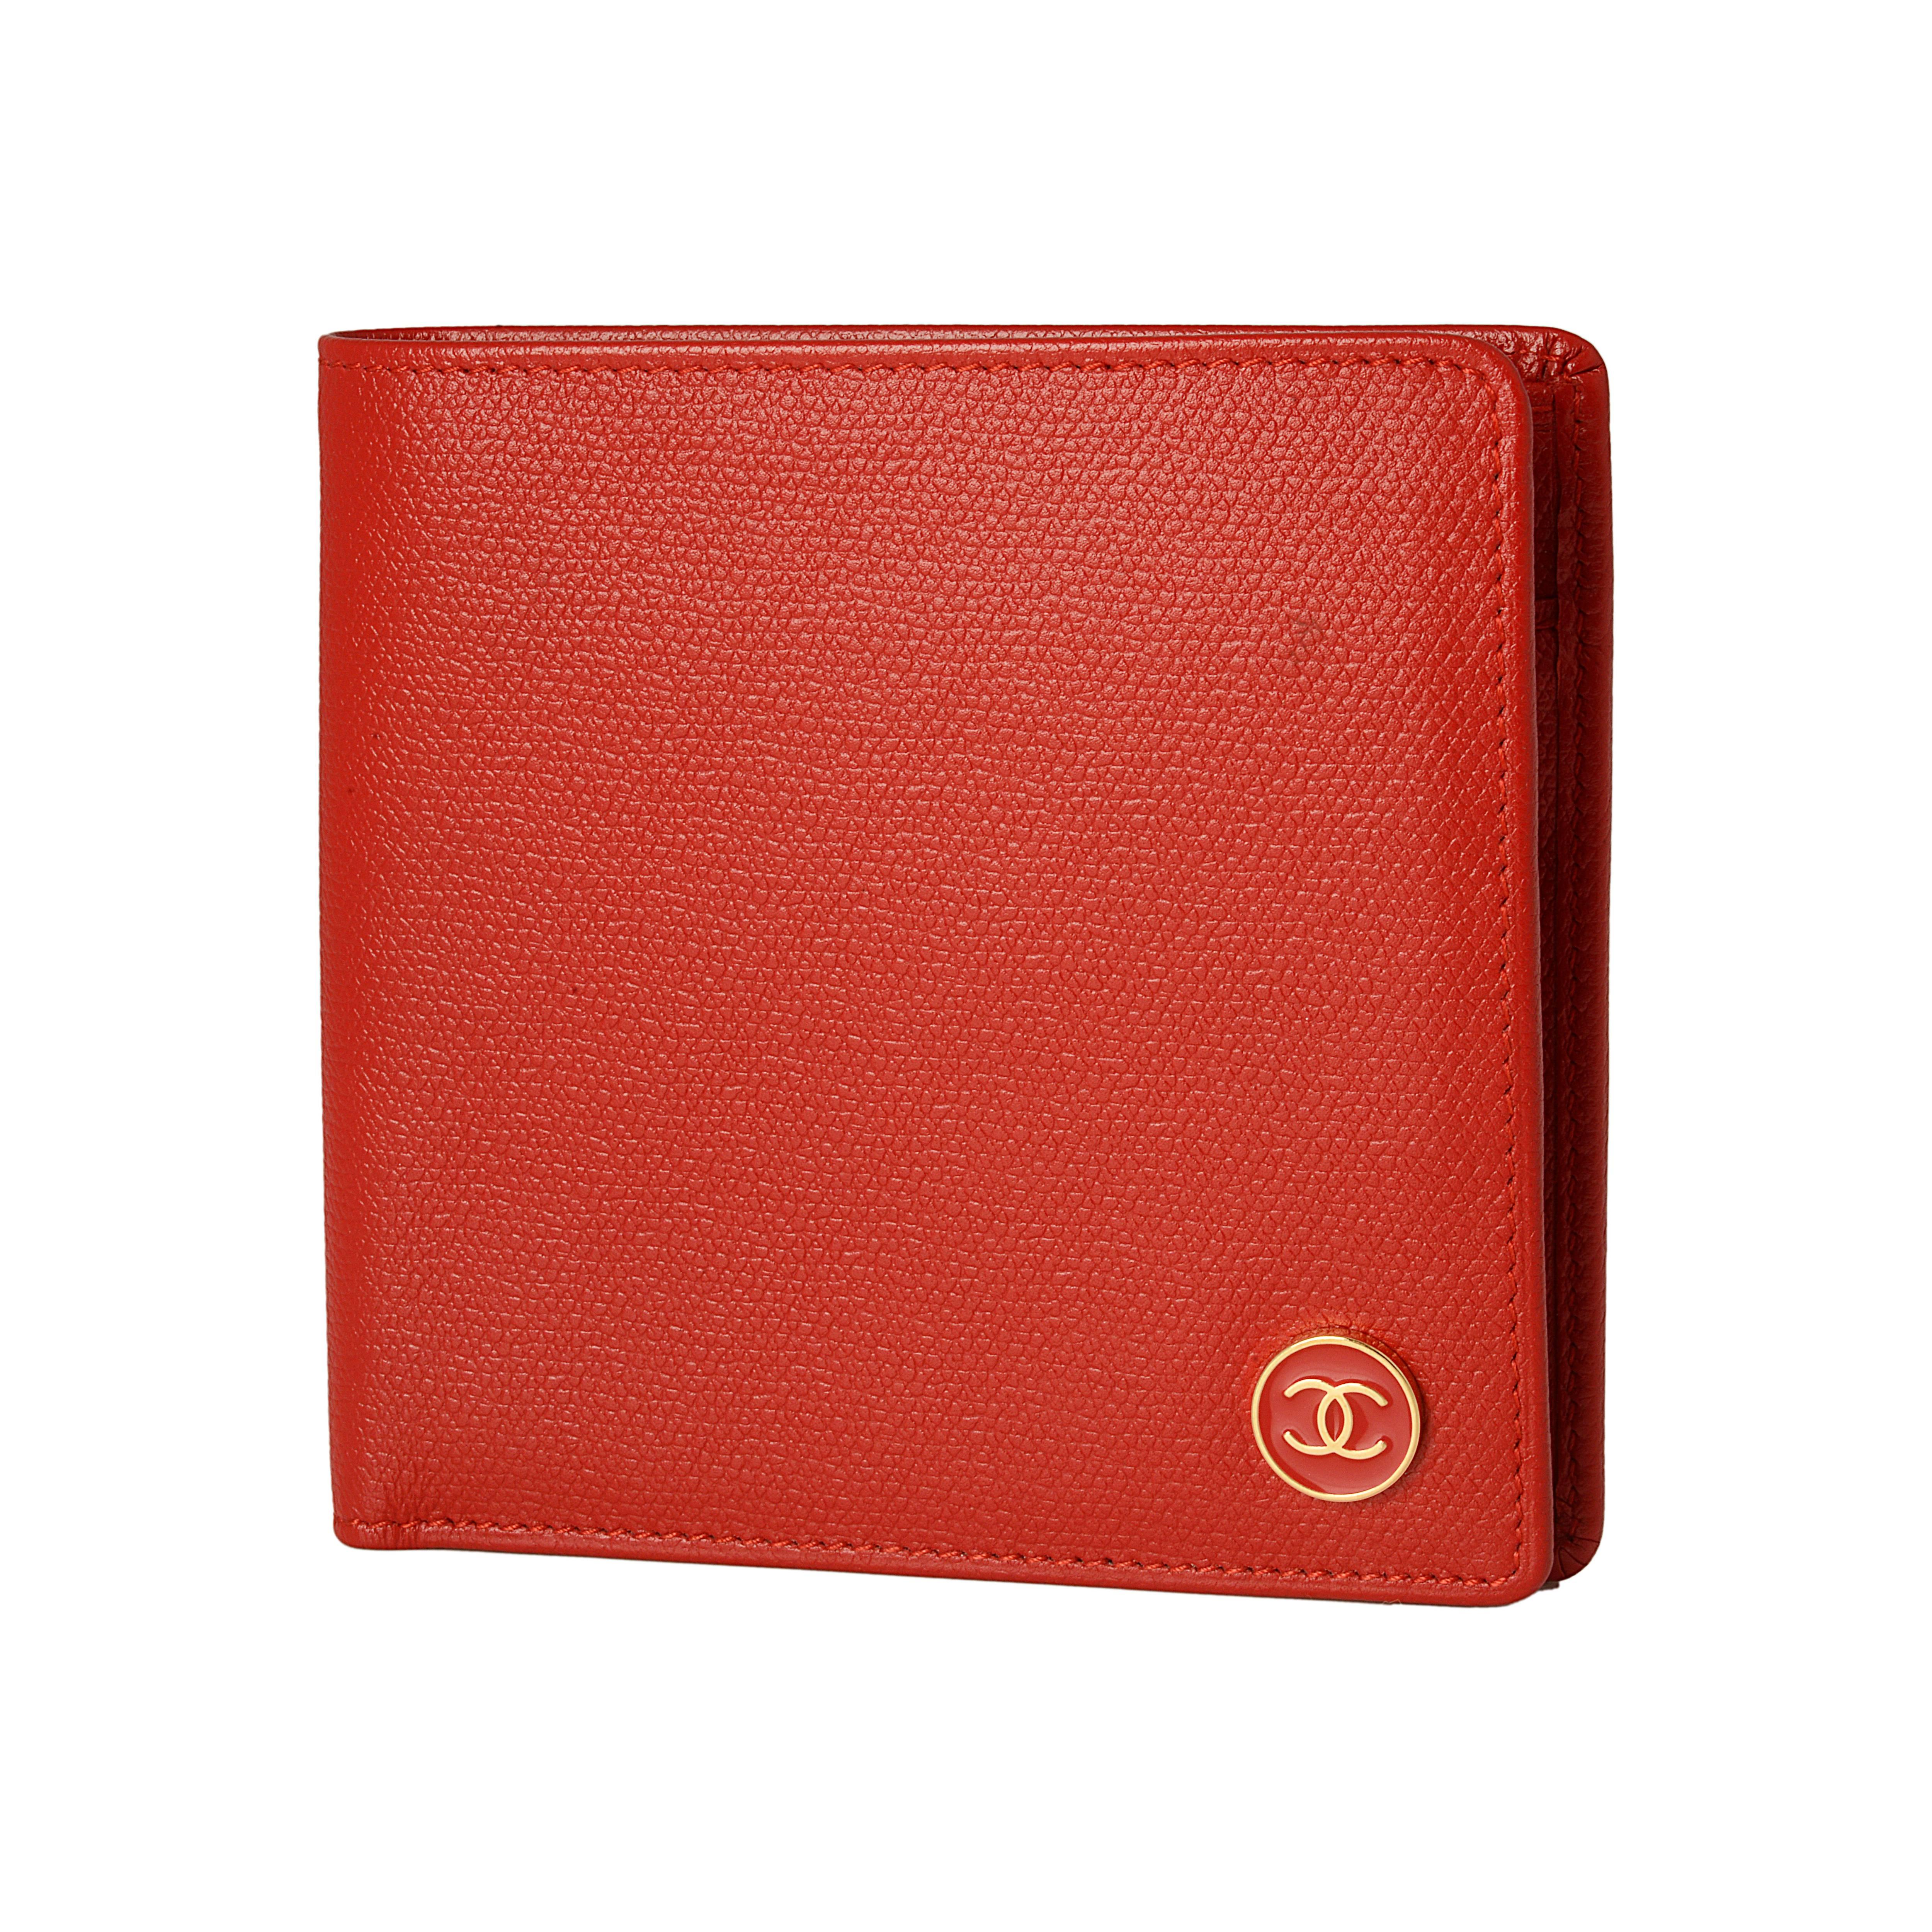 Chanel Bi-Fold Red Leather Wallet